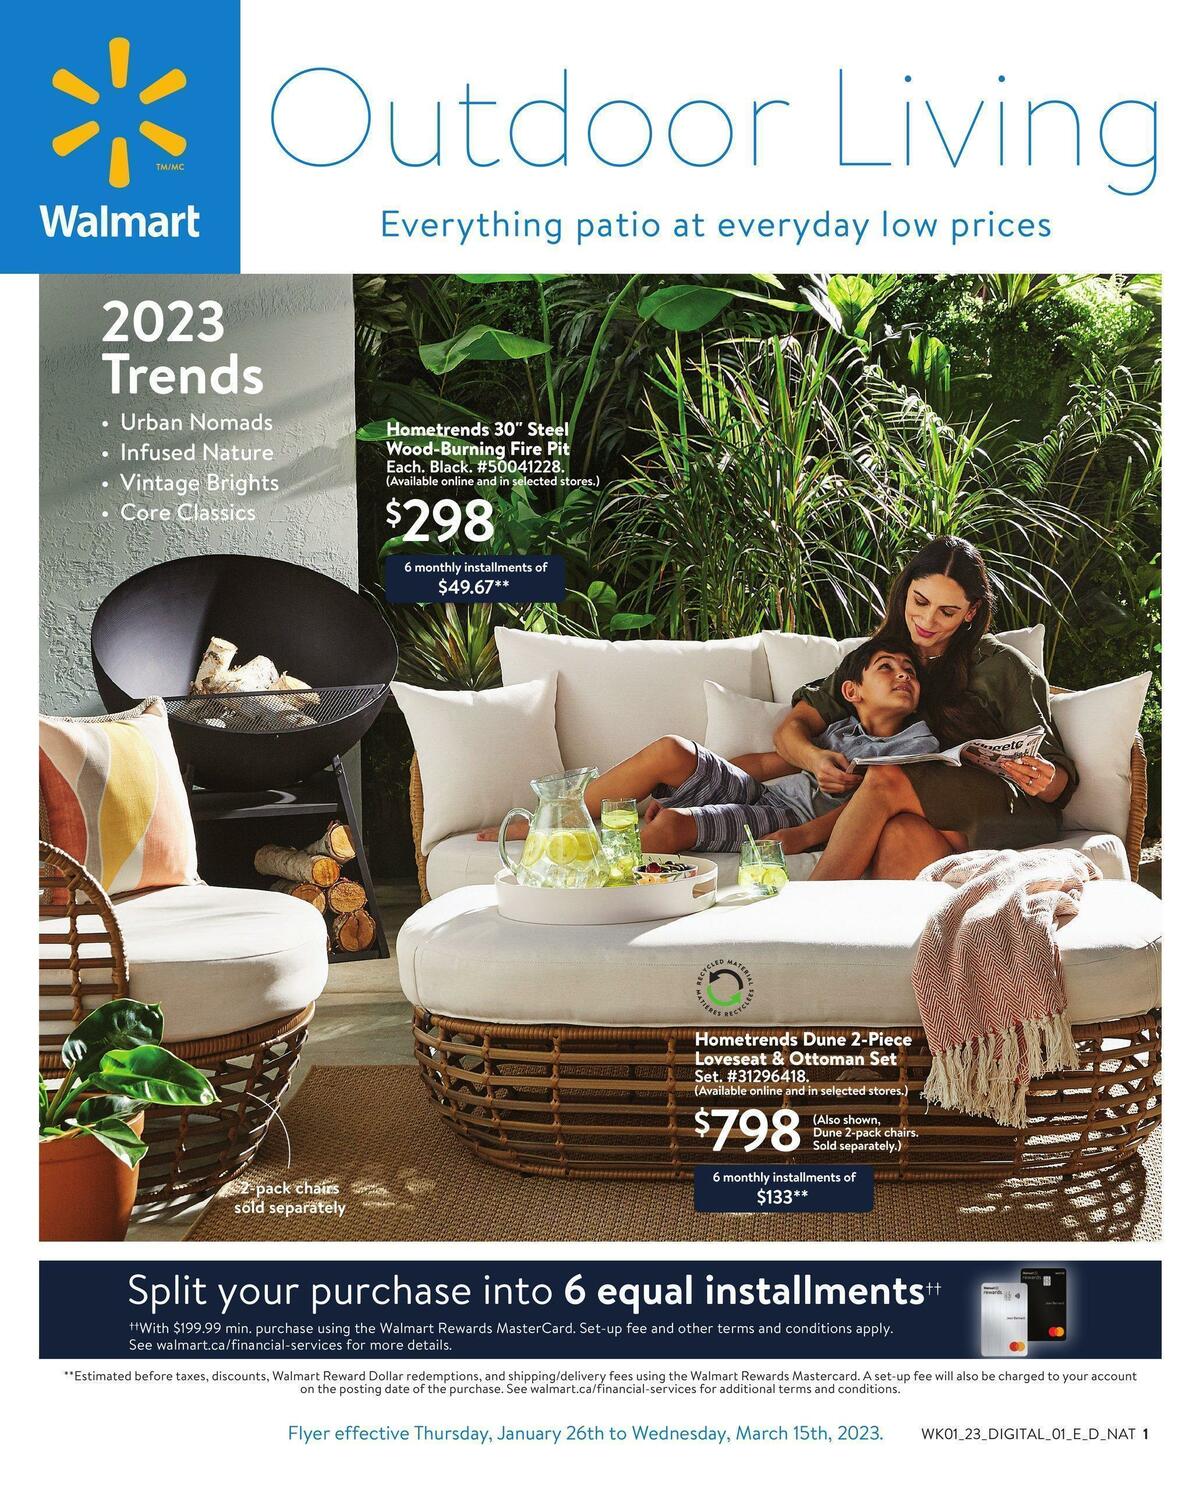 Walmart Patio Digest Flyer from January 26